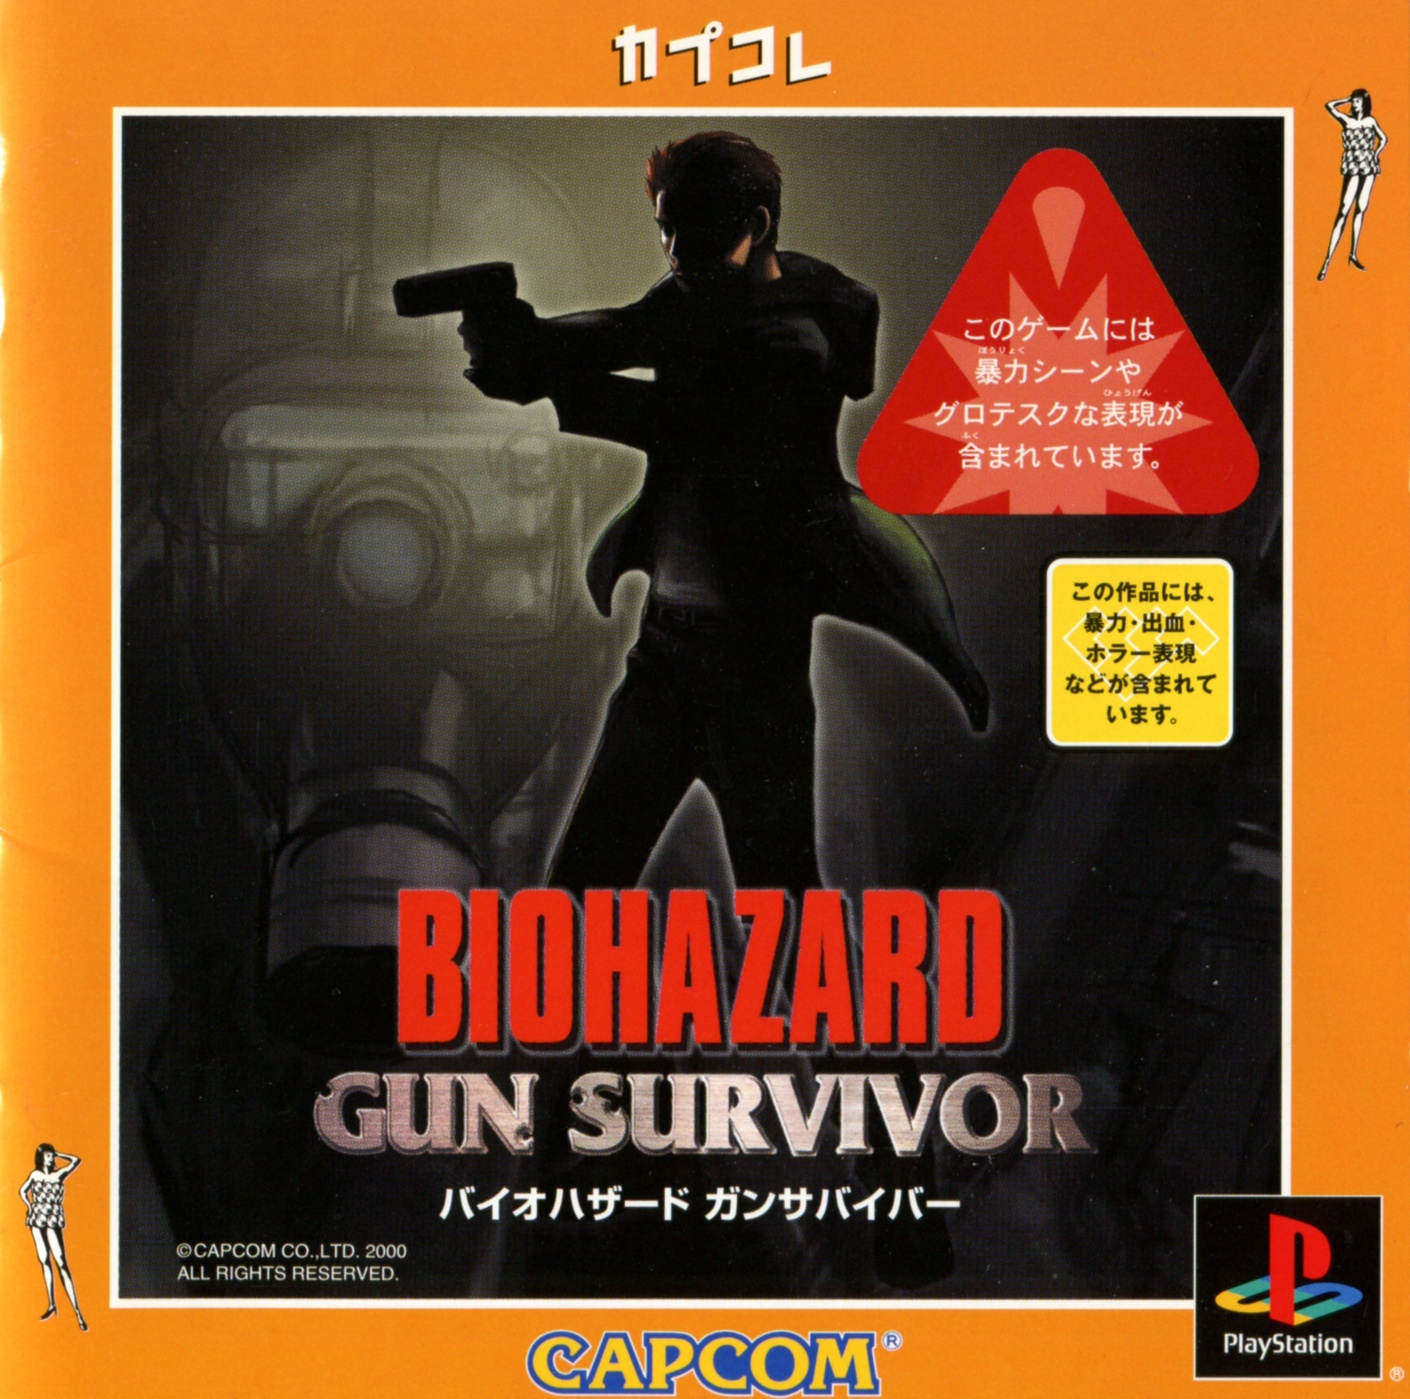 Resident Evil Survivor PSX cover